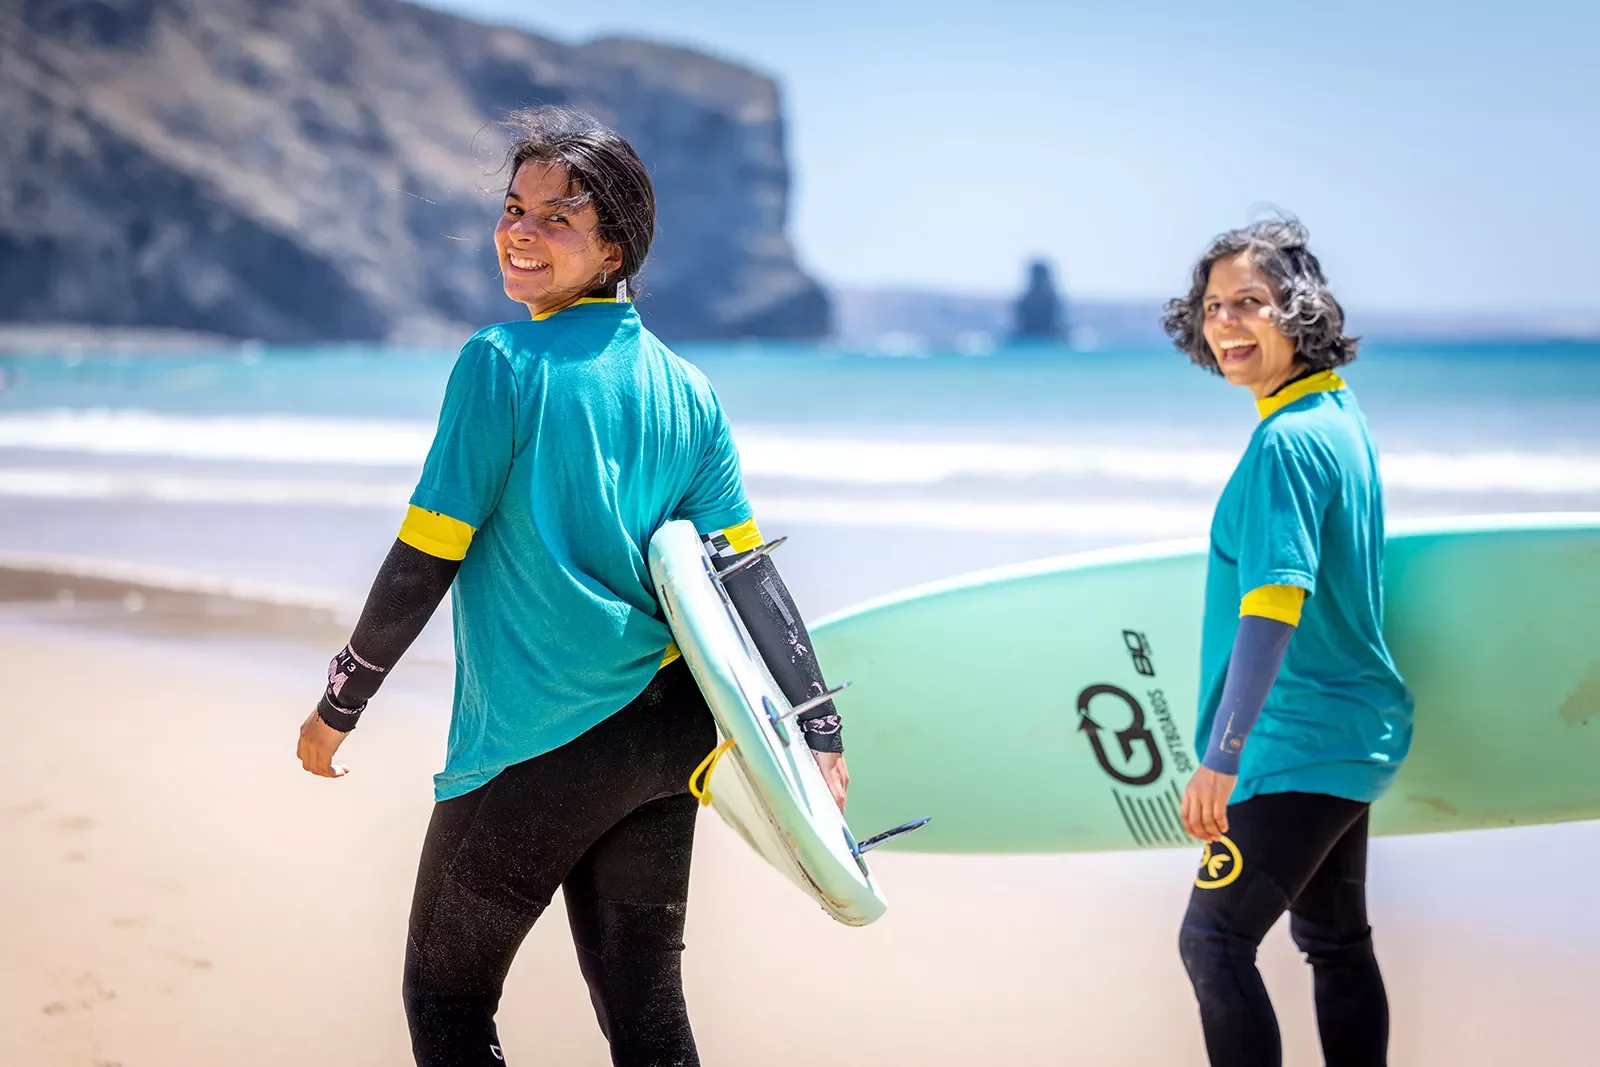 Two women with surfboards walking towards the ocean